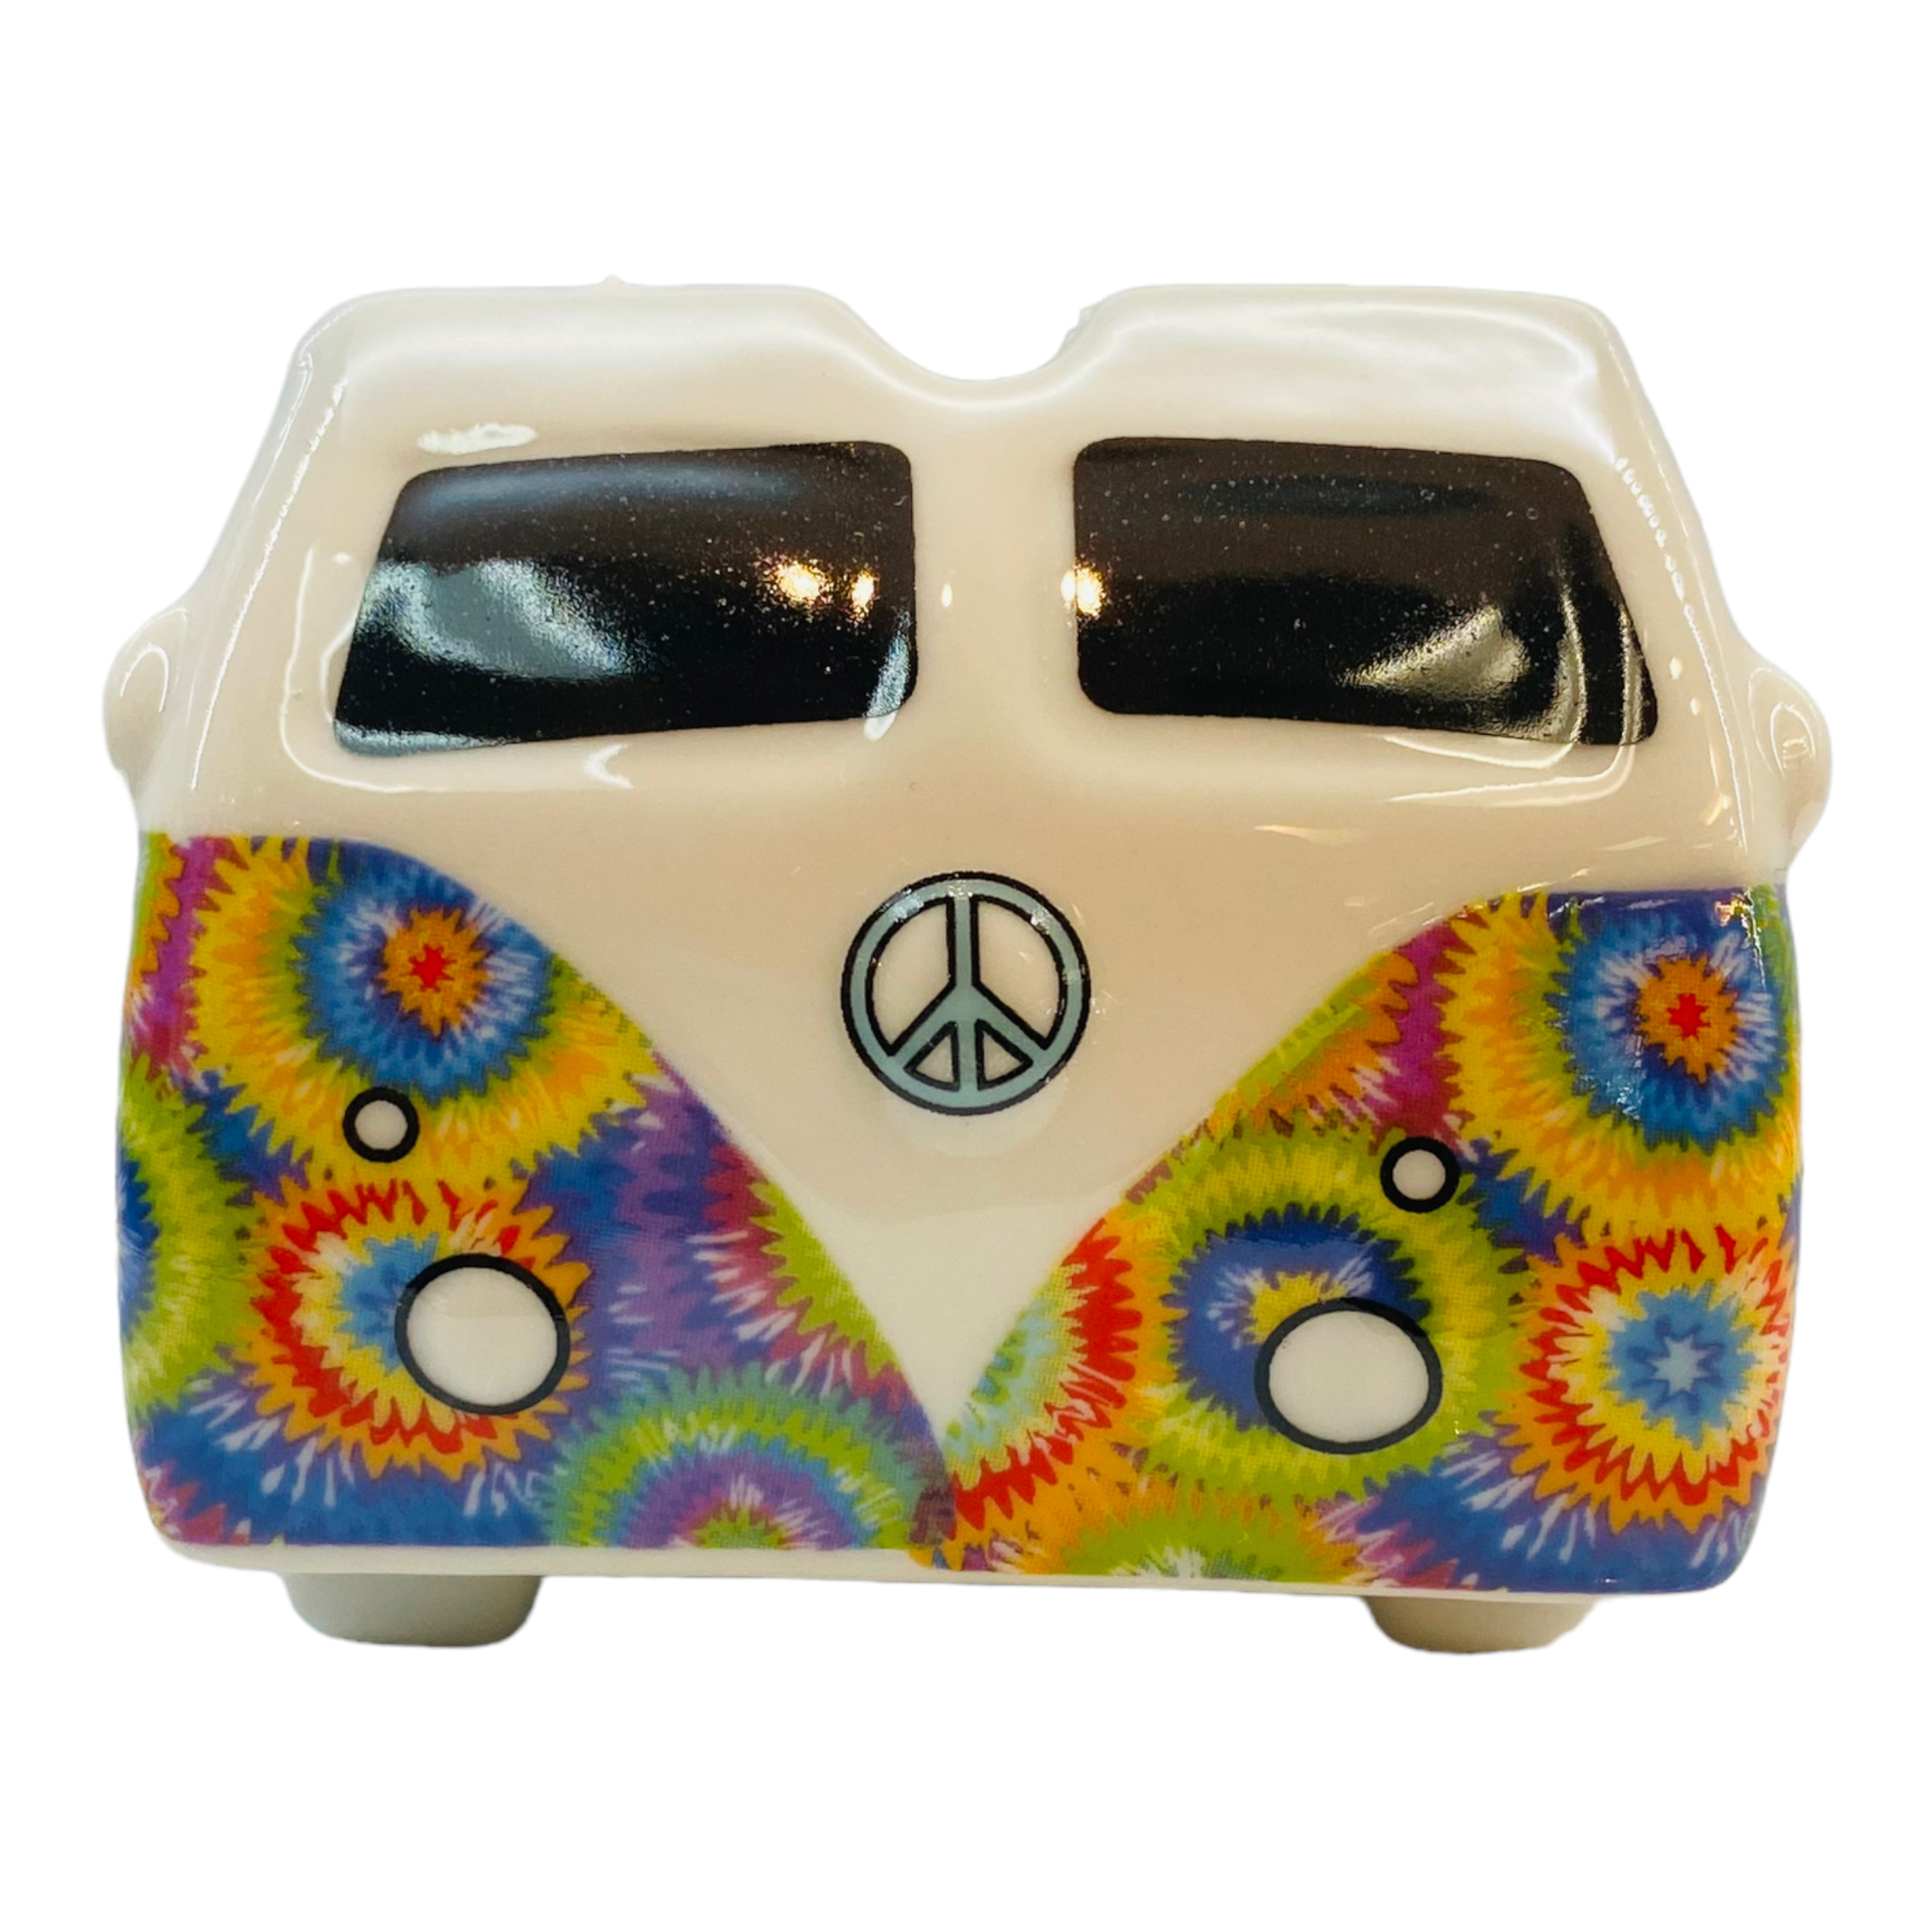 cute Vintage Hippie Bus Ceramic Ashtray Tie Dye - Rainbow Tie Dye